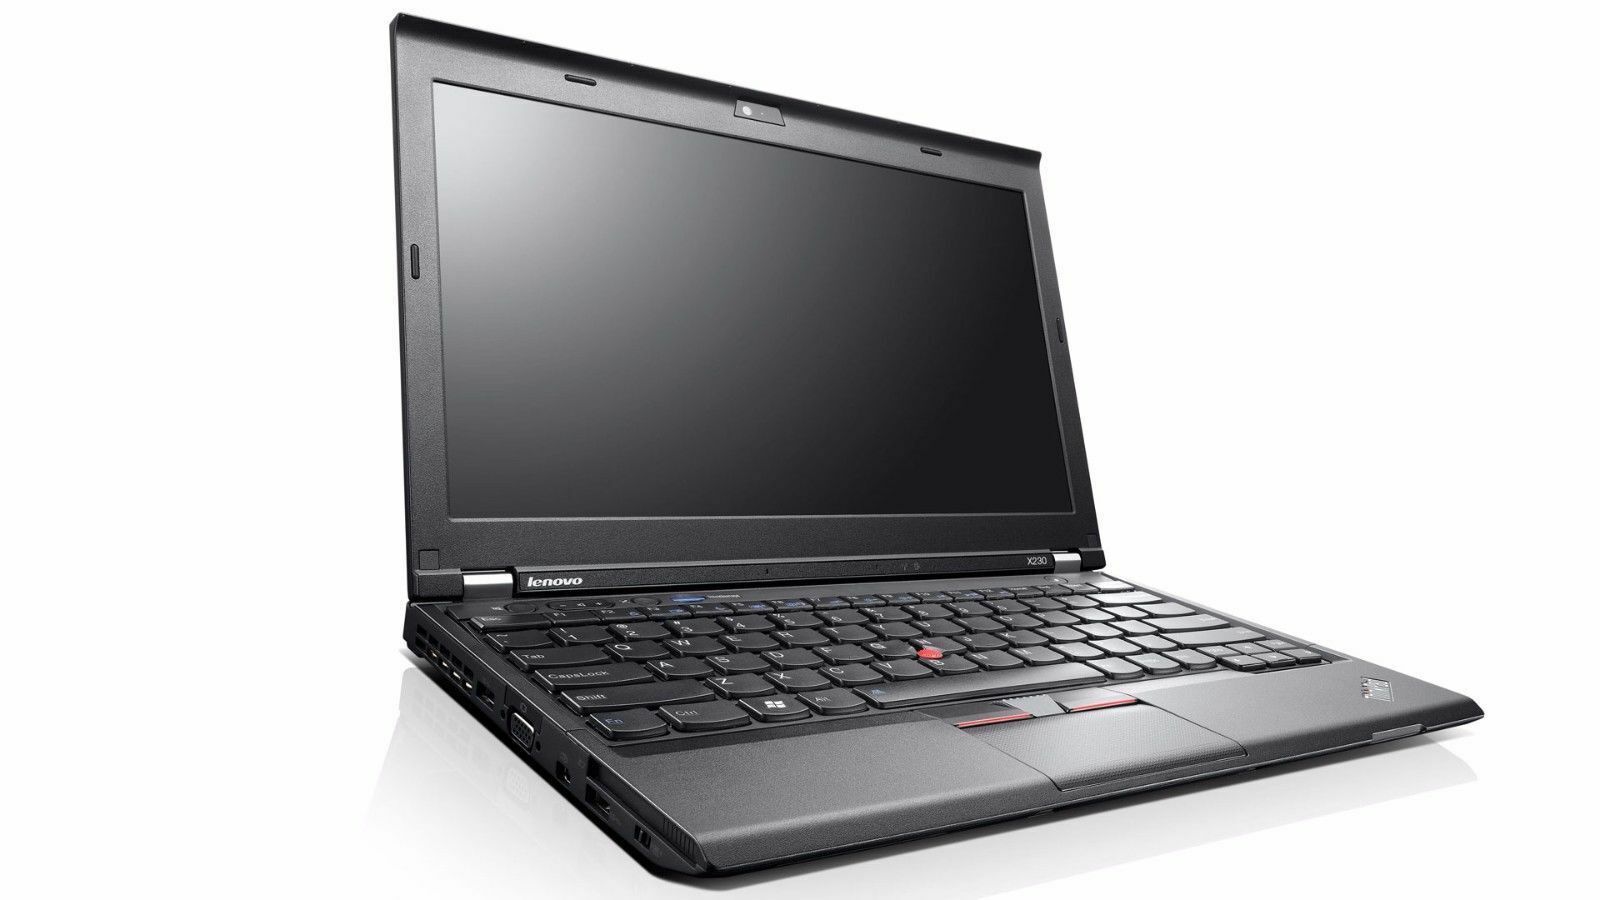 Lenovo ThinkPad X230 Intel i7 3520m 2.90Ghz 8GB RAM 120GB HDD 12.5" NO OS Full Size Image